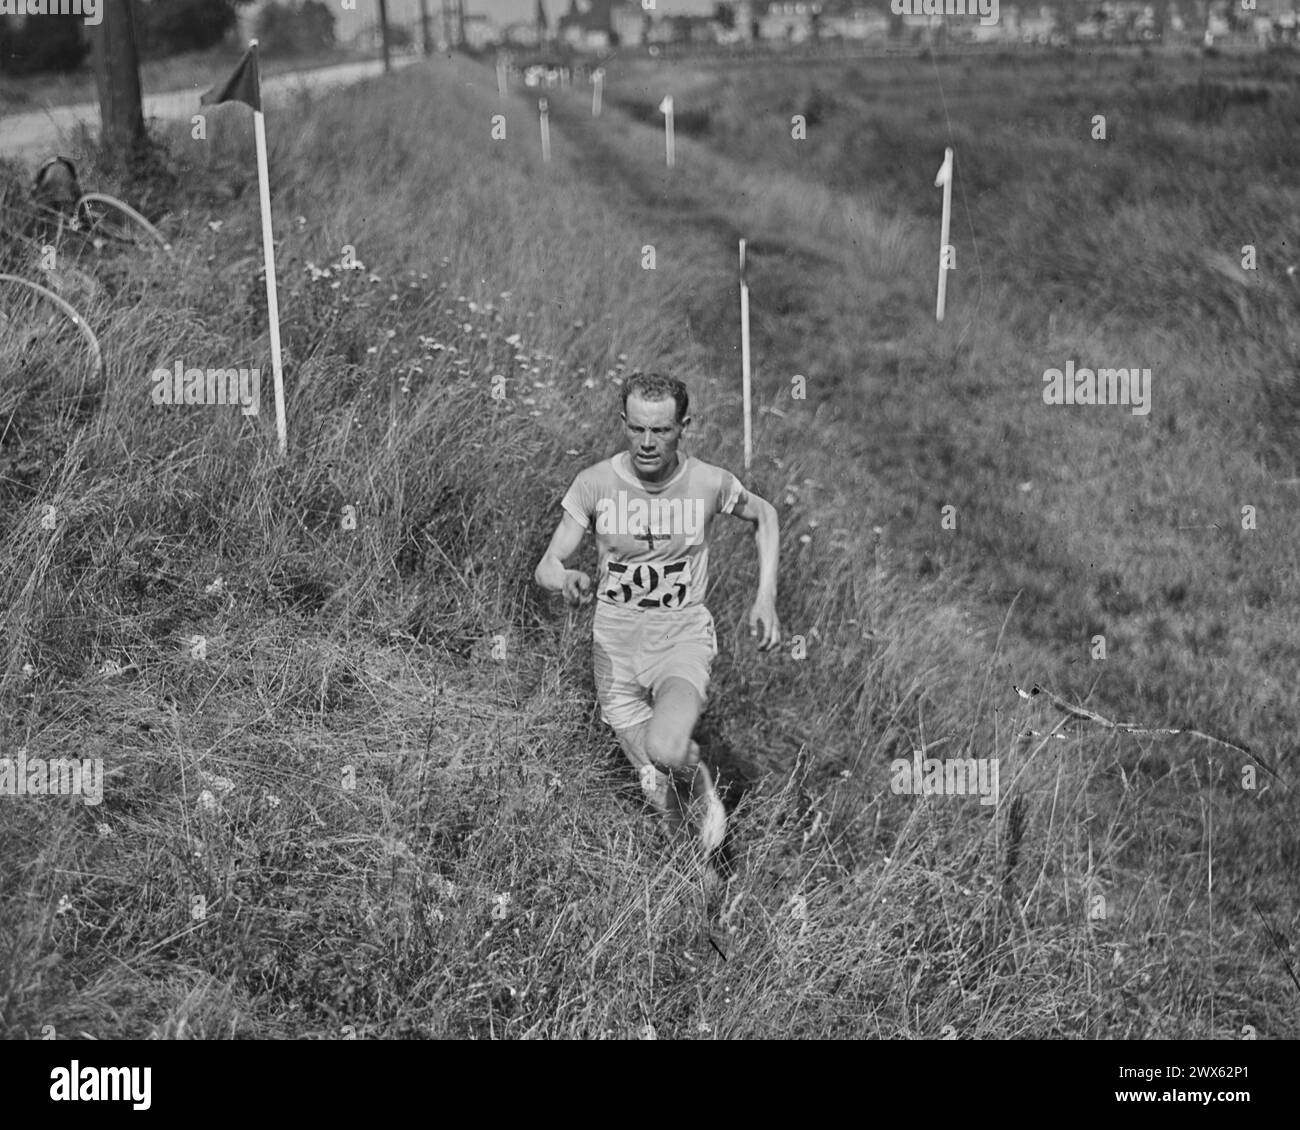 Paavo Nurmi - Cross Country Event - Paris Olympic Games - 1924 - Gold Medallist - Winner Stock Photo